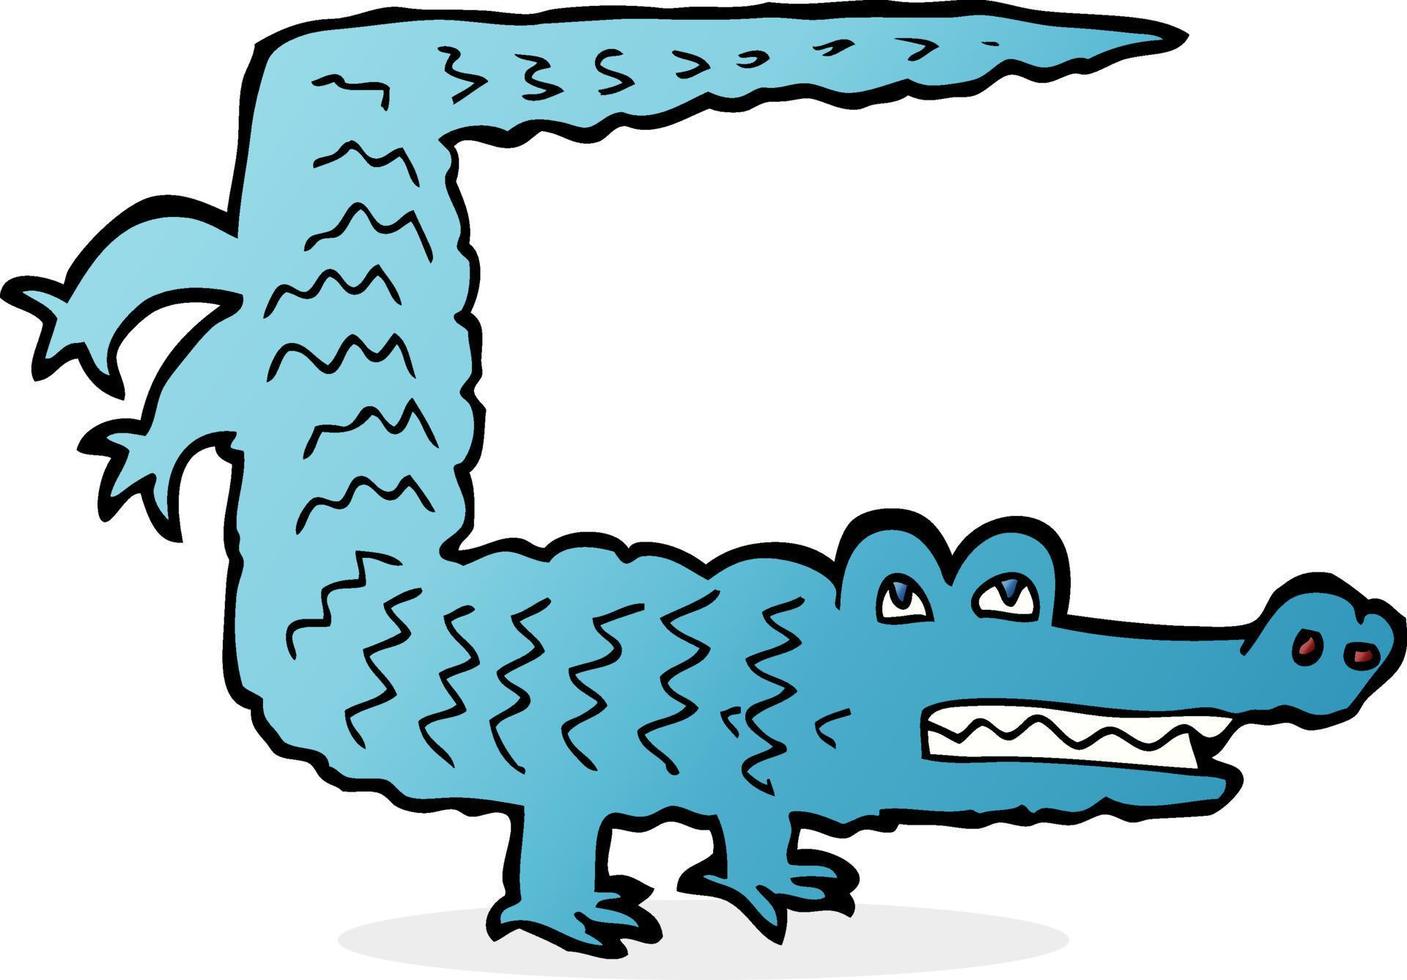 crocodilo de desenho animado de personagem doodle vetor